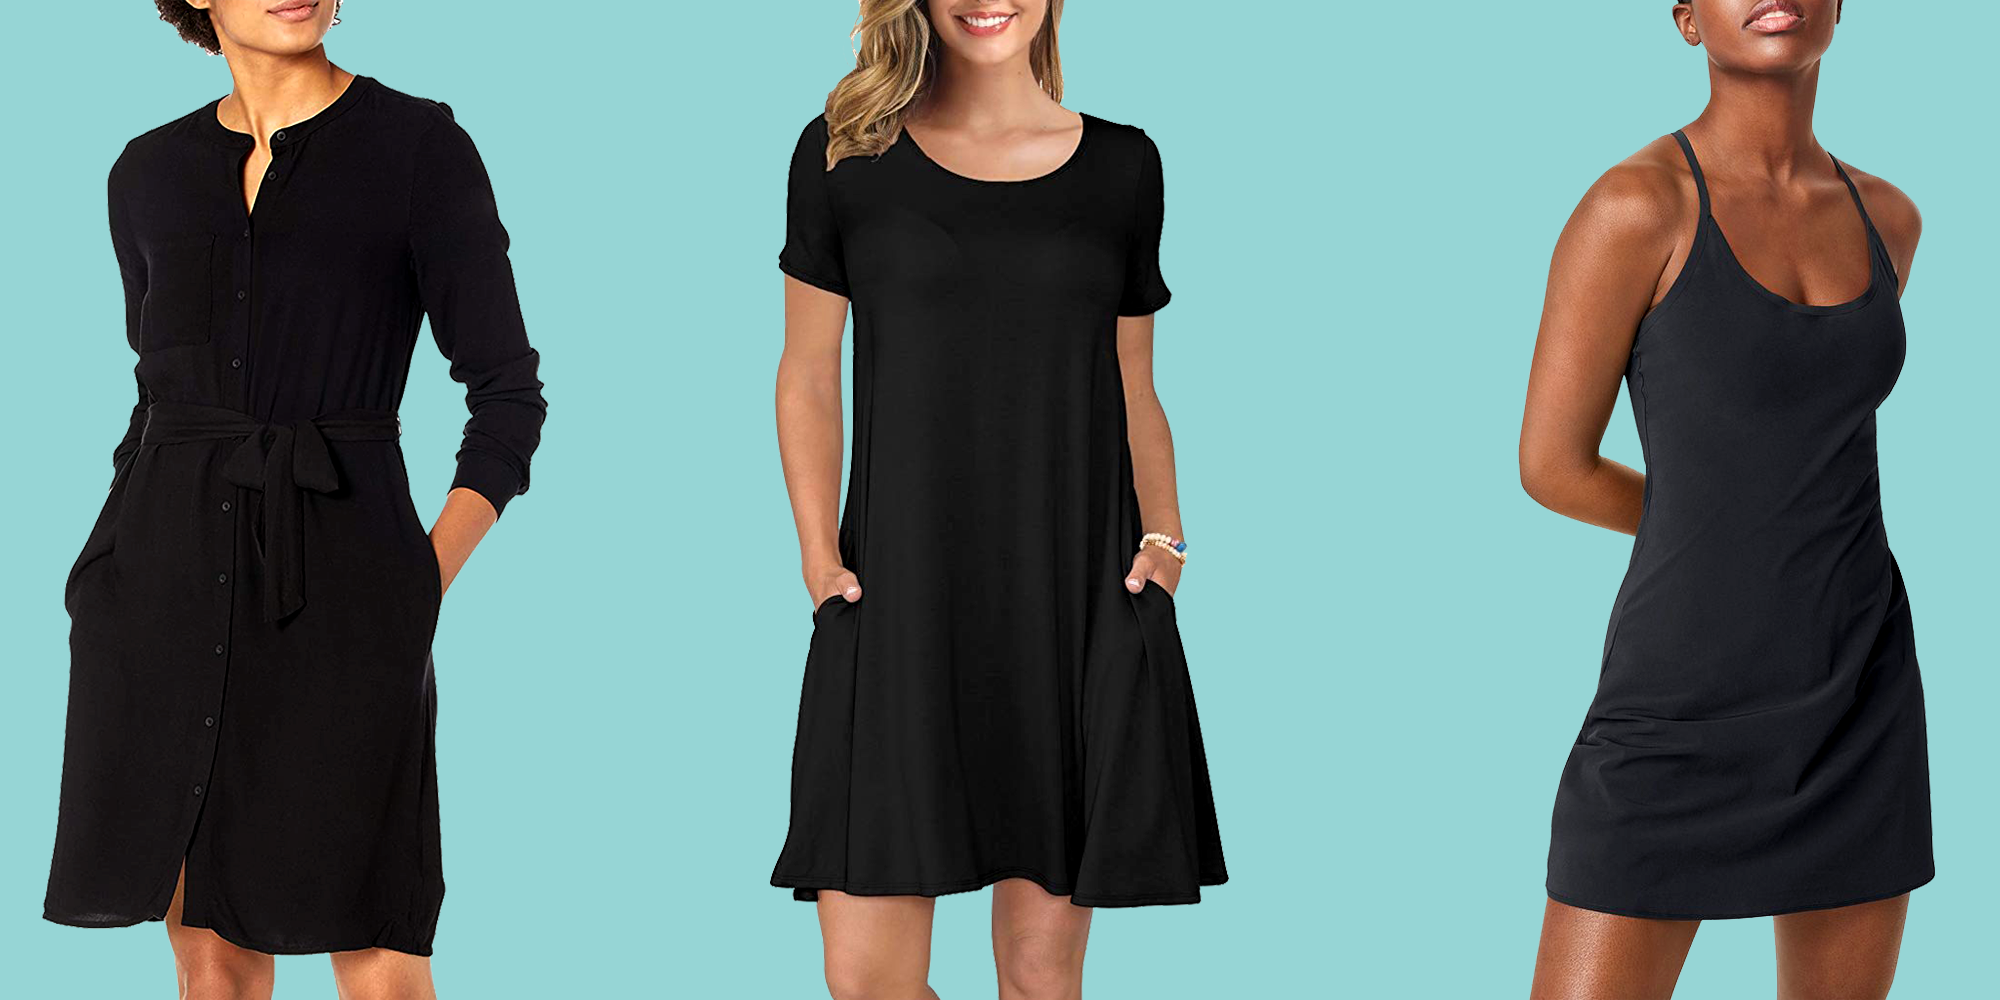 Colors Dress Casual dress 100% cotton dress whit short sleeves Dress size L